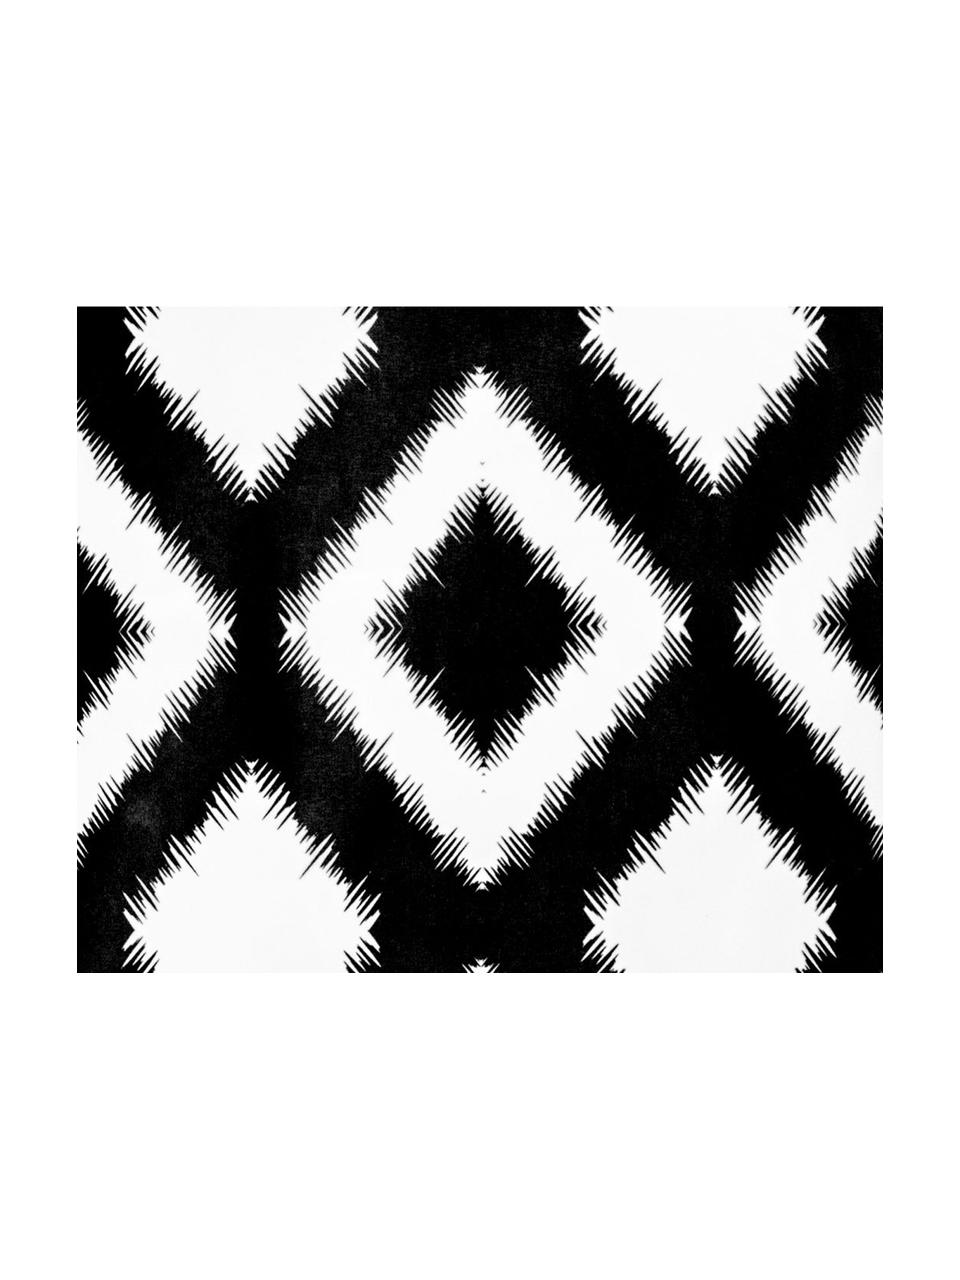 Dubbelzijdige kussenhoes Losange, 70% polyester, 30% katoen, Wit, zwart, 50 x 50 cm